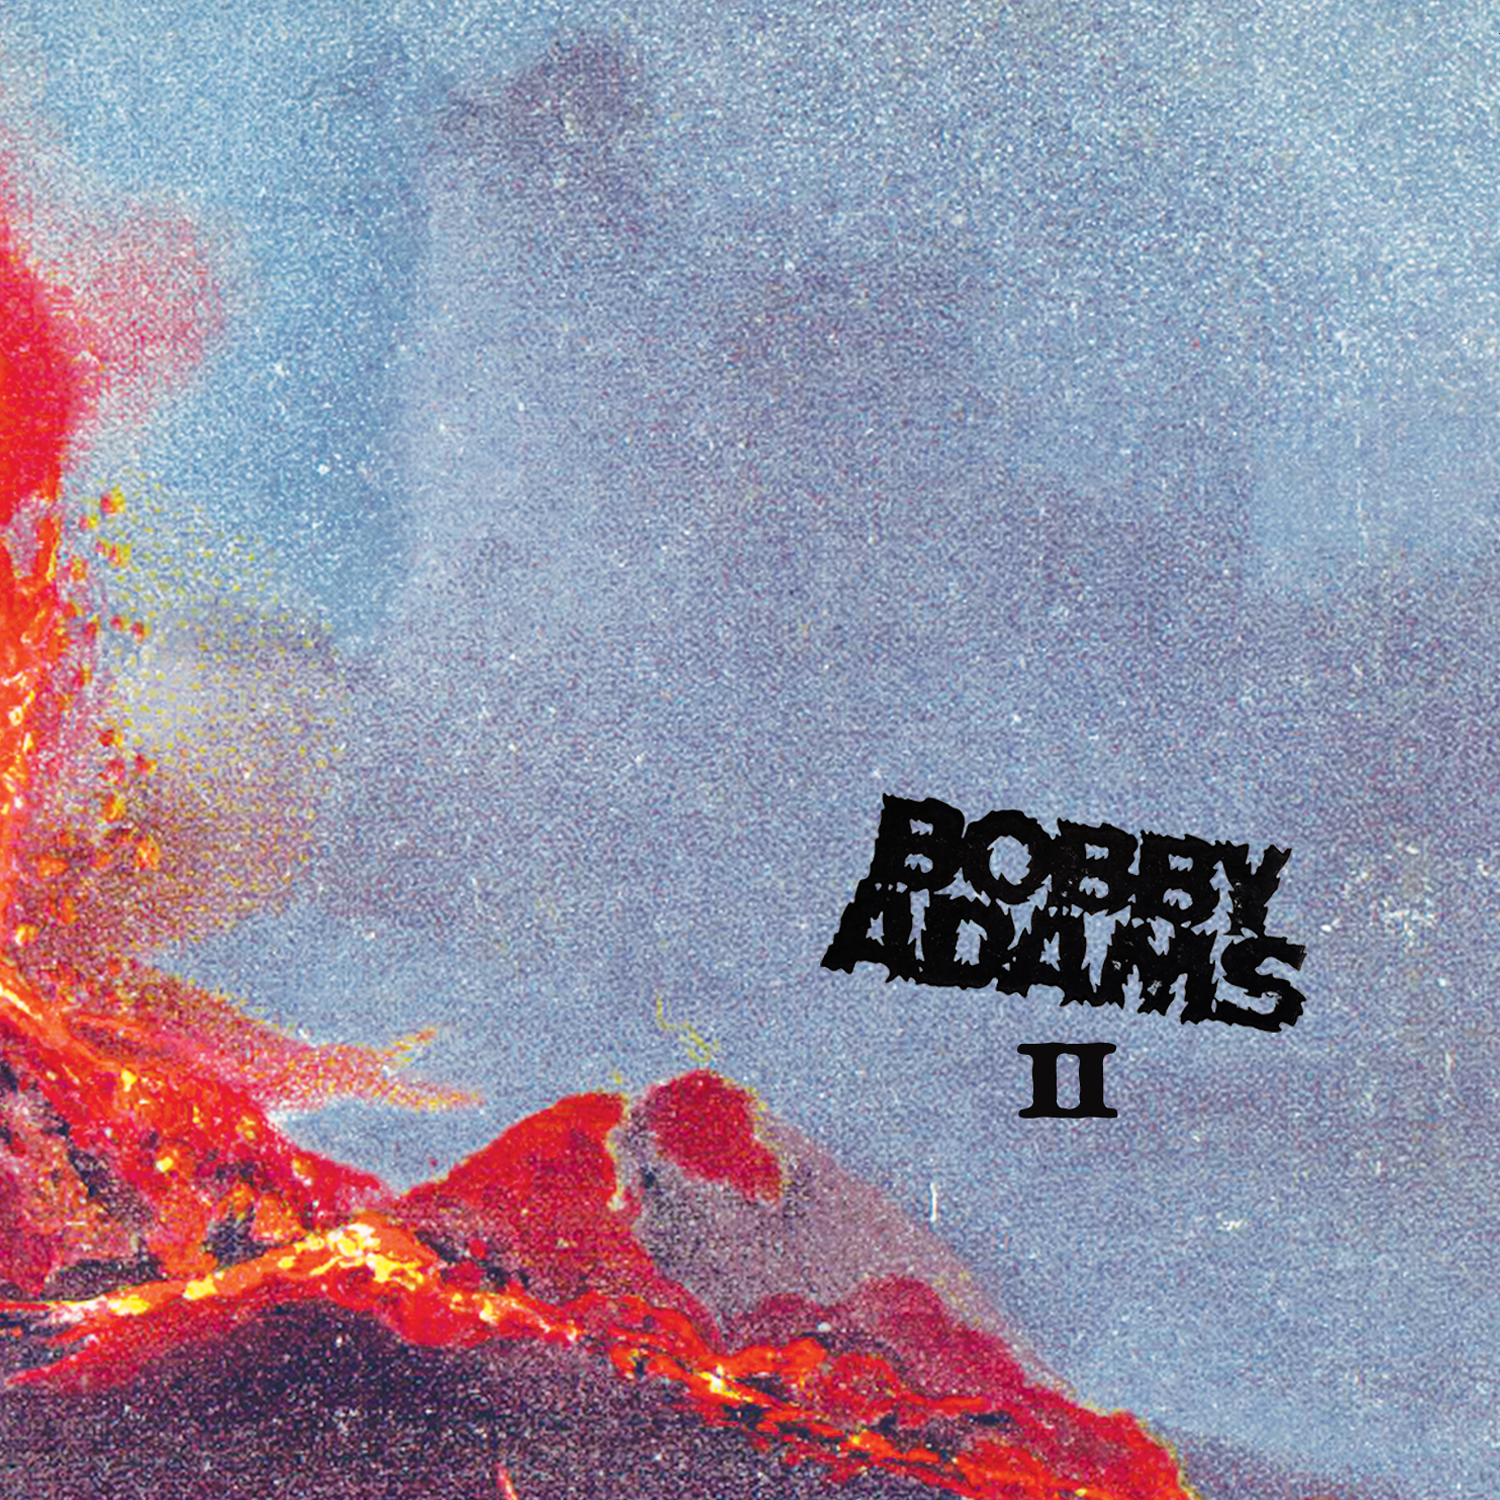 Bobby Adams II online cover